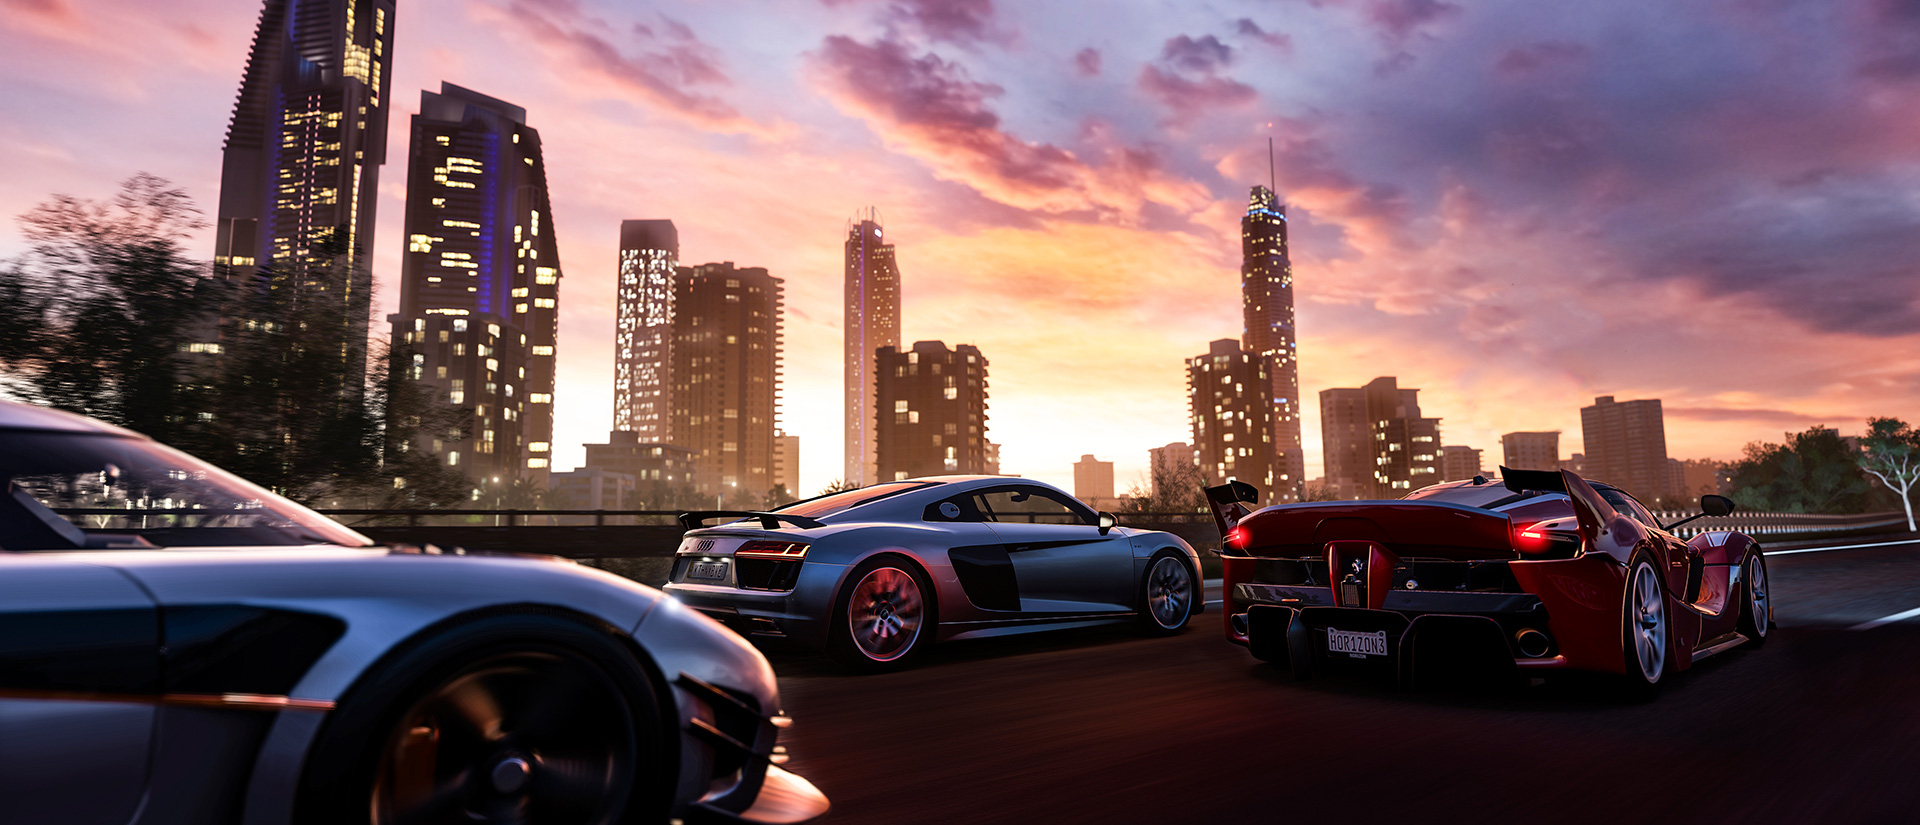 [E3 2016] Winning the amazing race with Forza Horizon 3